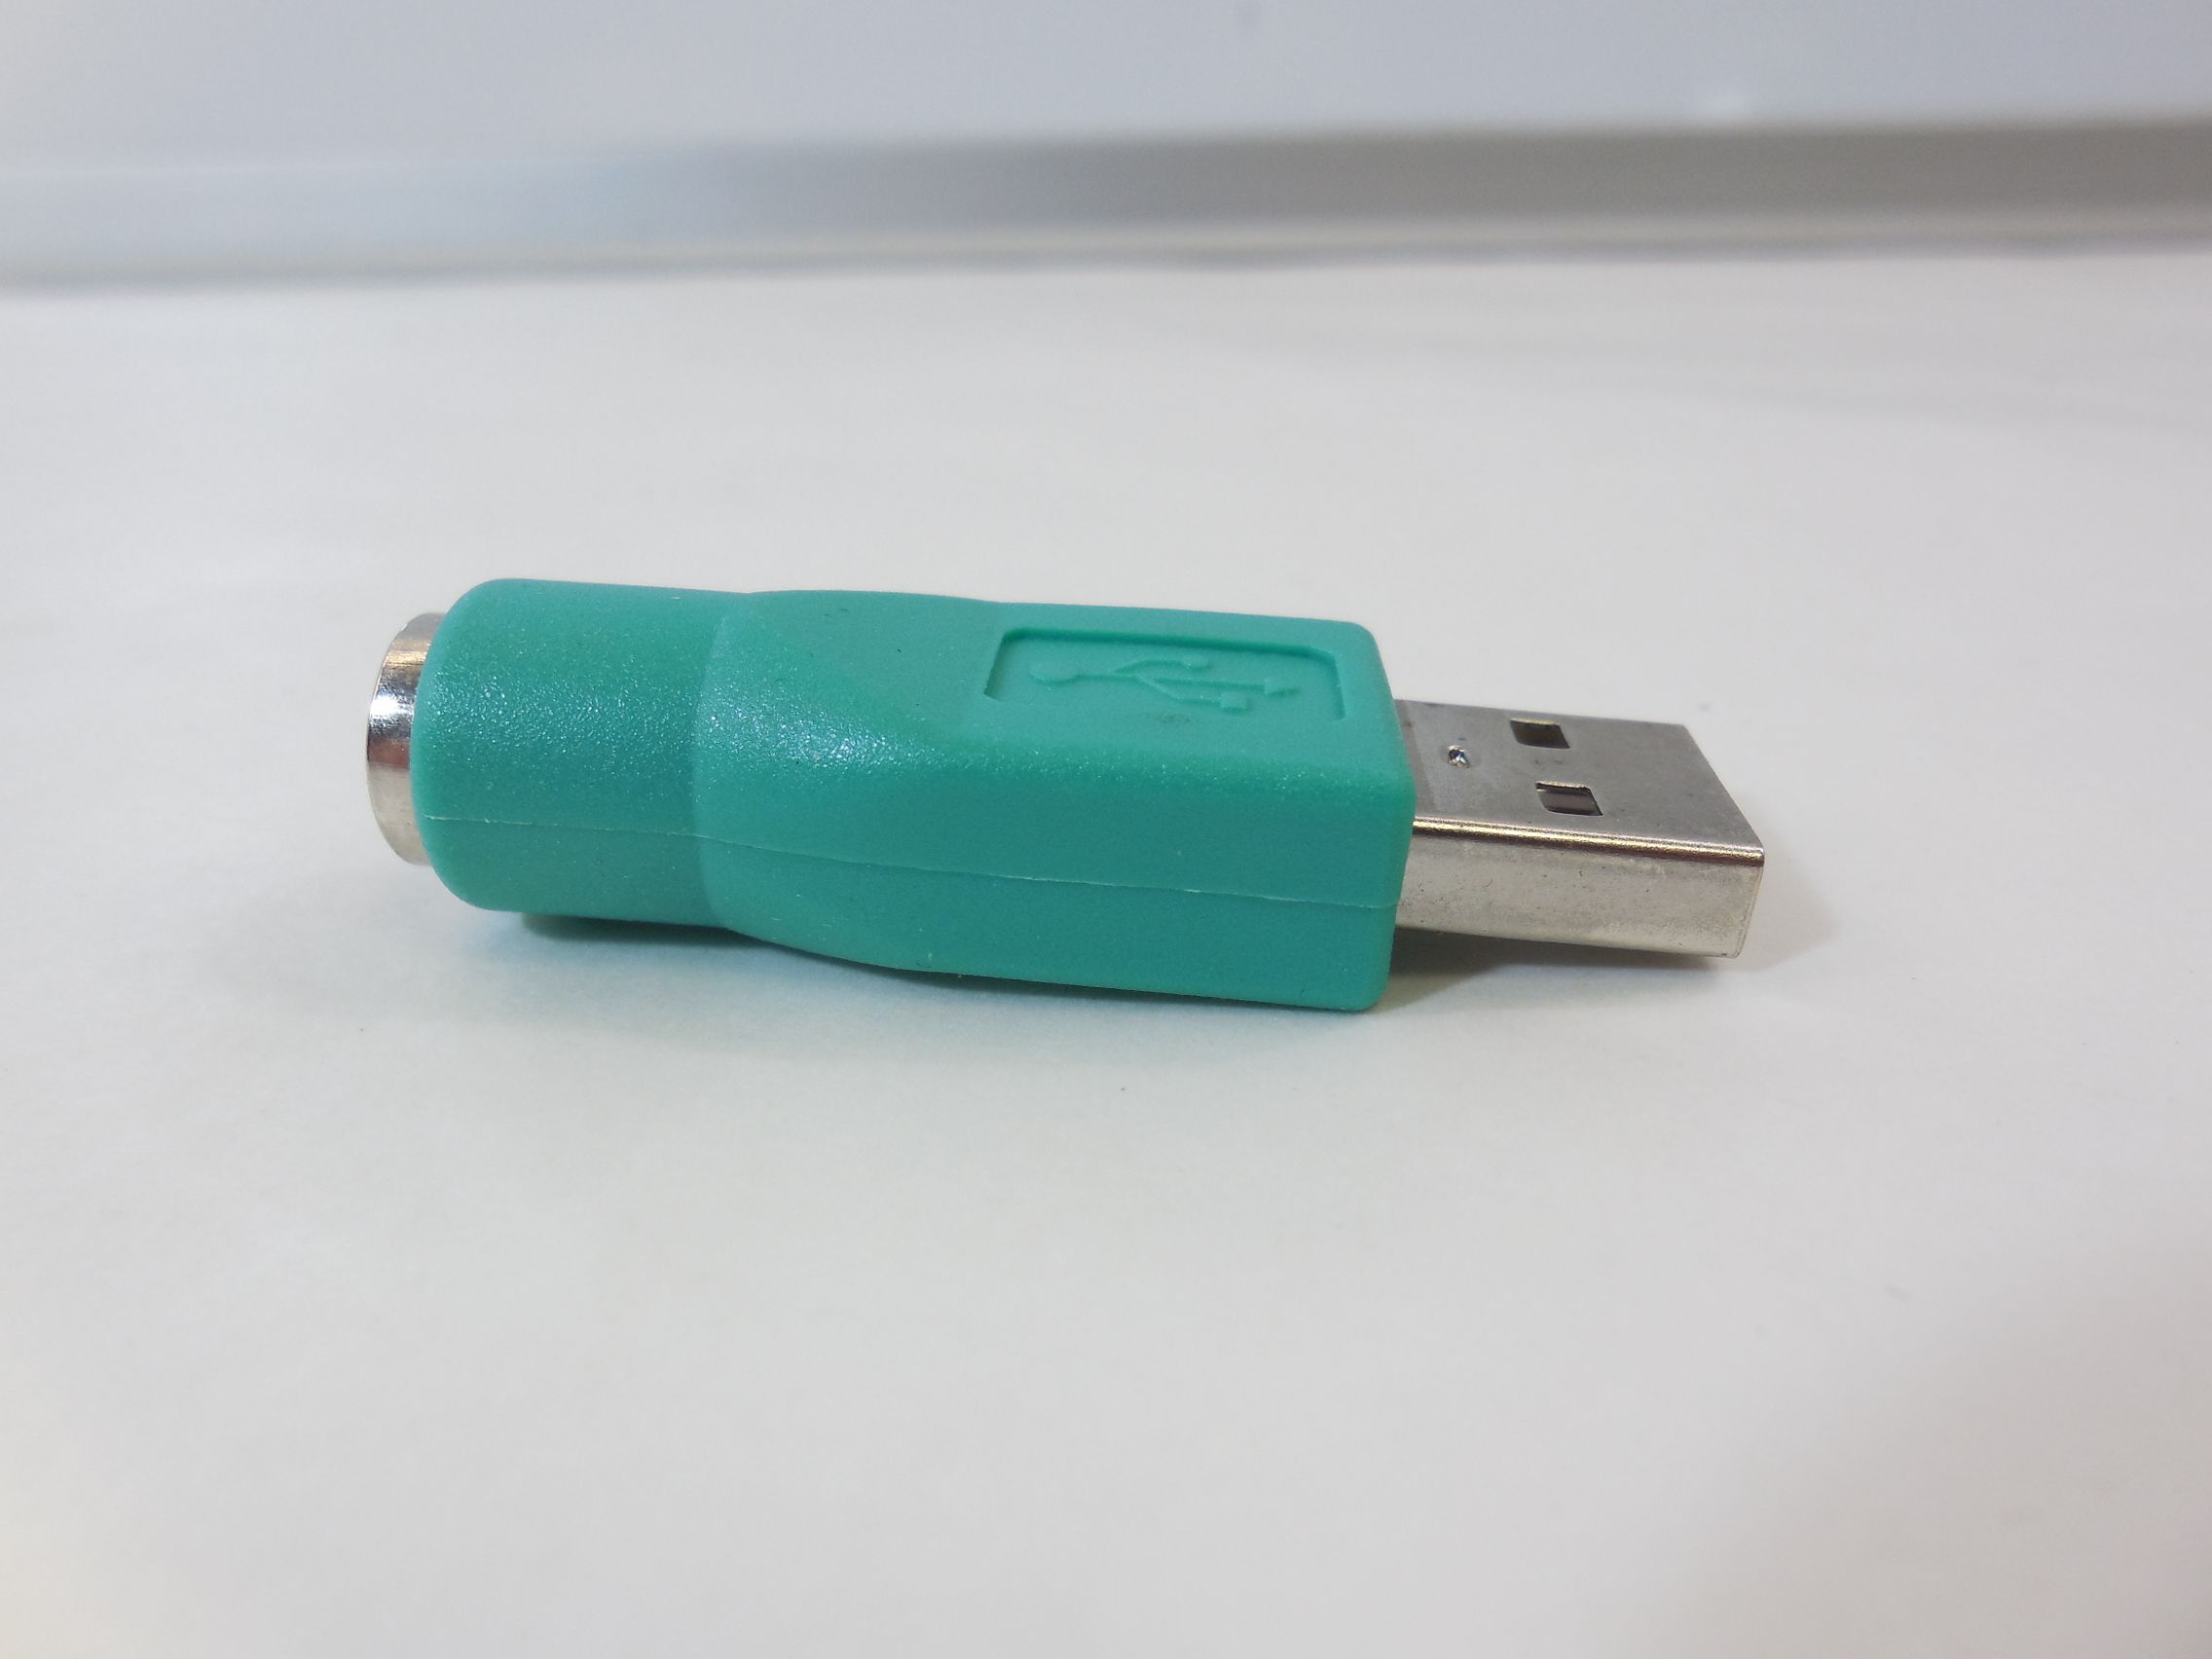 Флешка на пс 2. USB 2.0 Type-a - PS/2 переходник. Переходник с юсб на PS/2. Переходник USB (M) to PS/2 (F), (EUSBM-PS/2f). Переходник PS/2 на 2 USB.